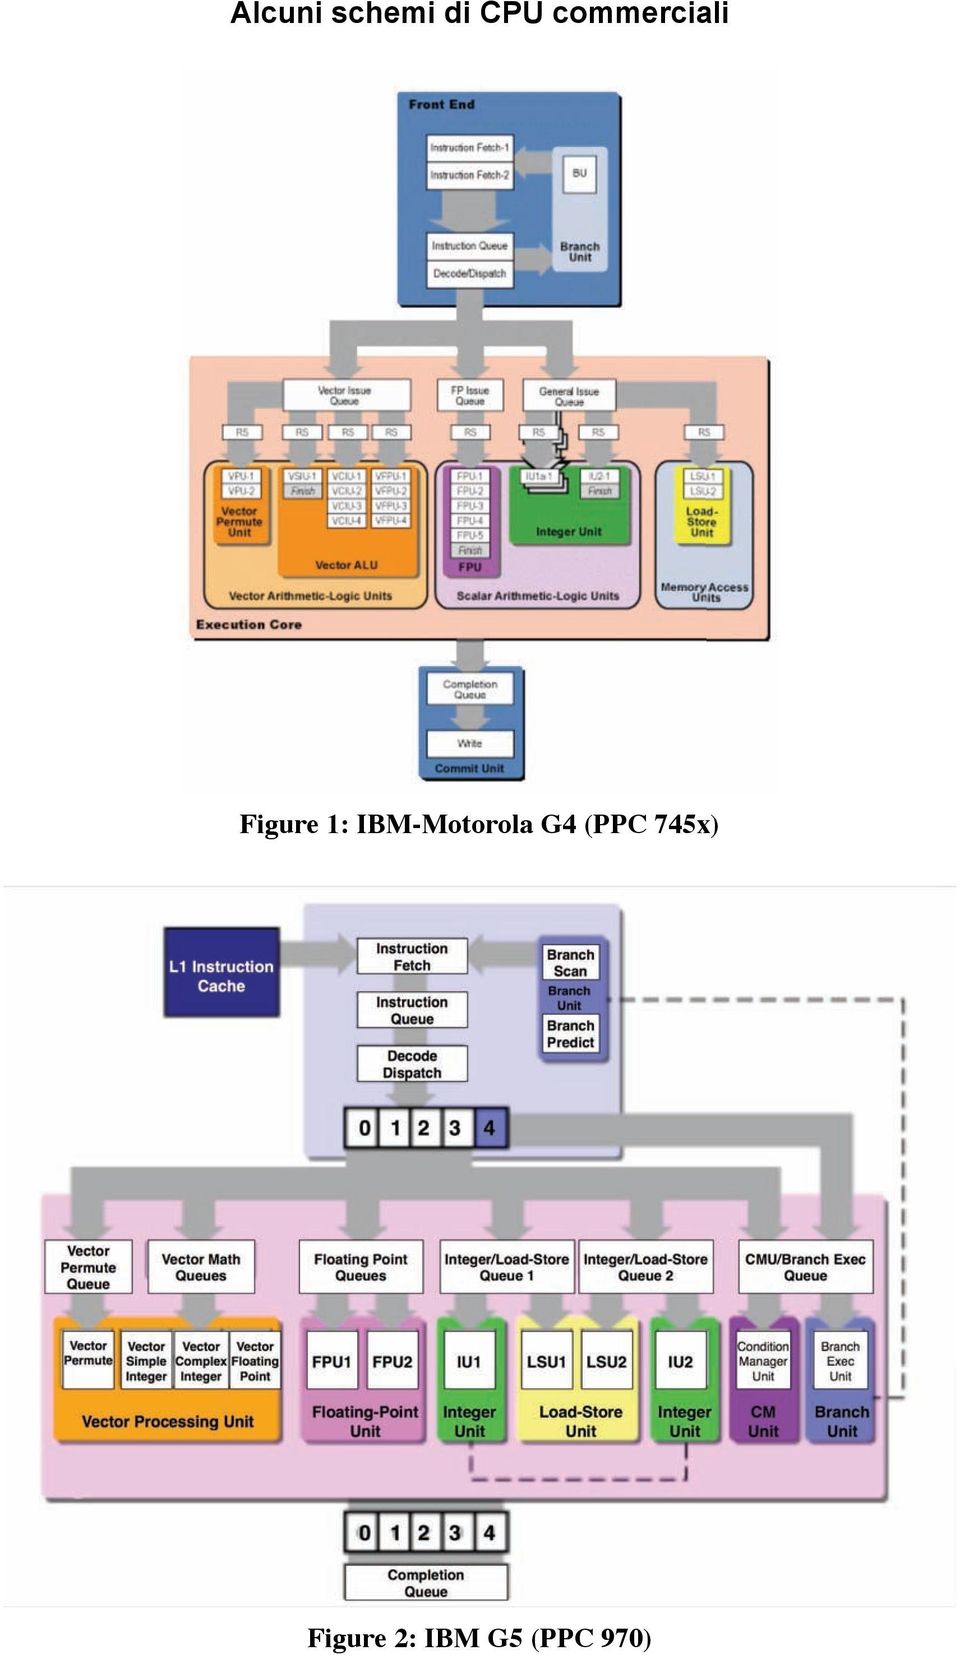 IBM-Motorola G4 (PPC